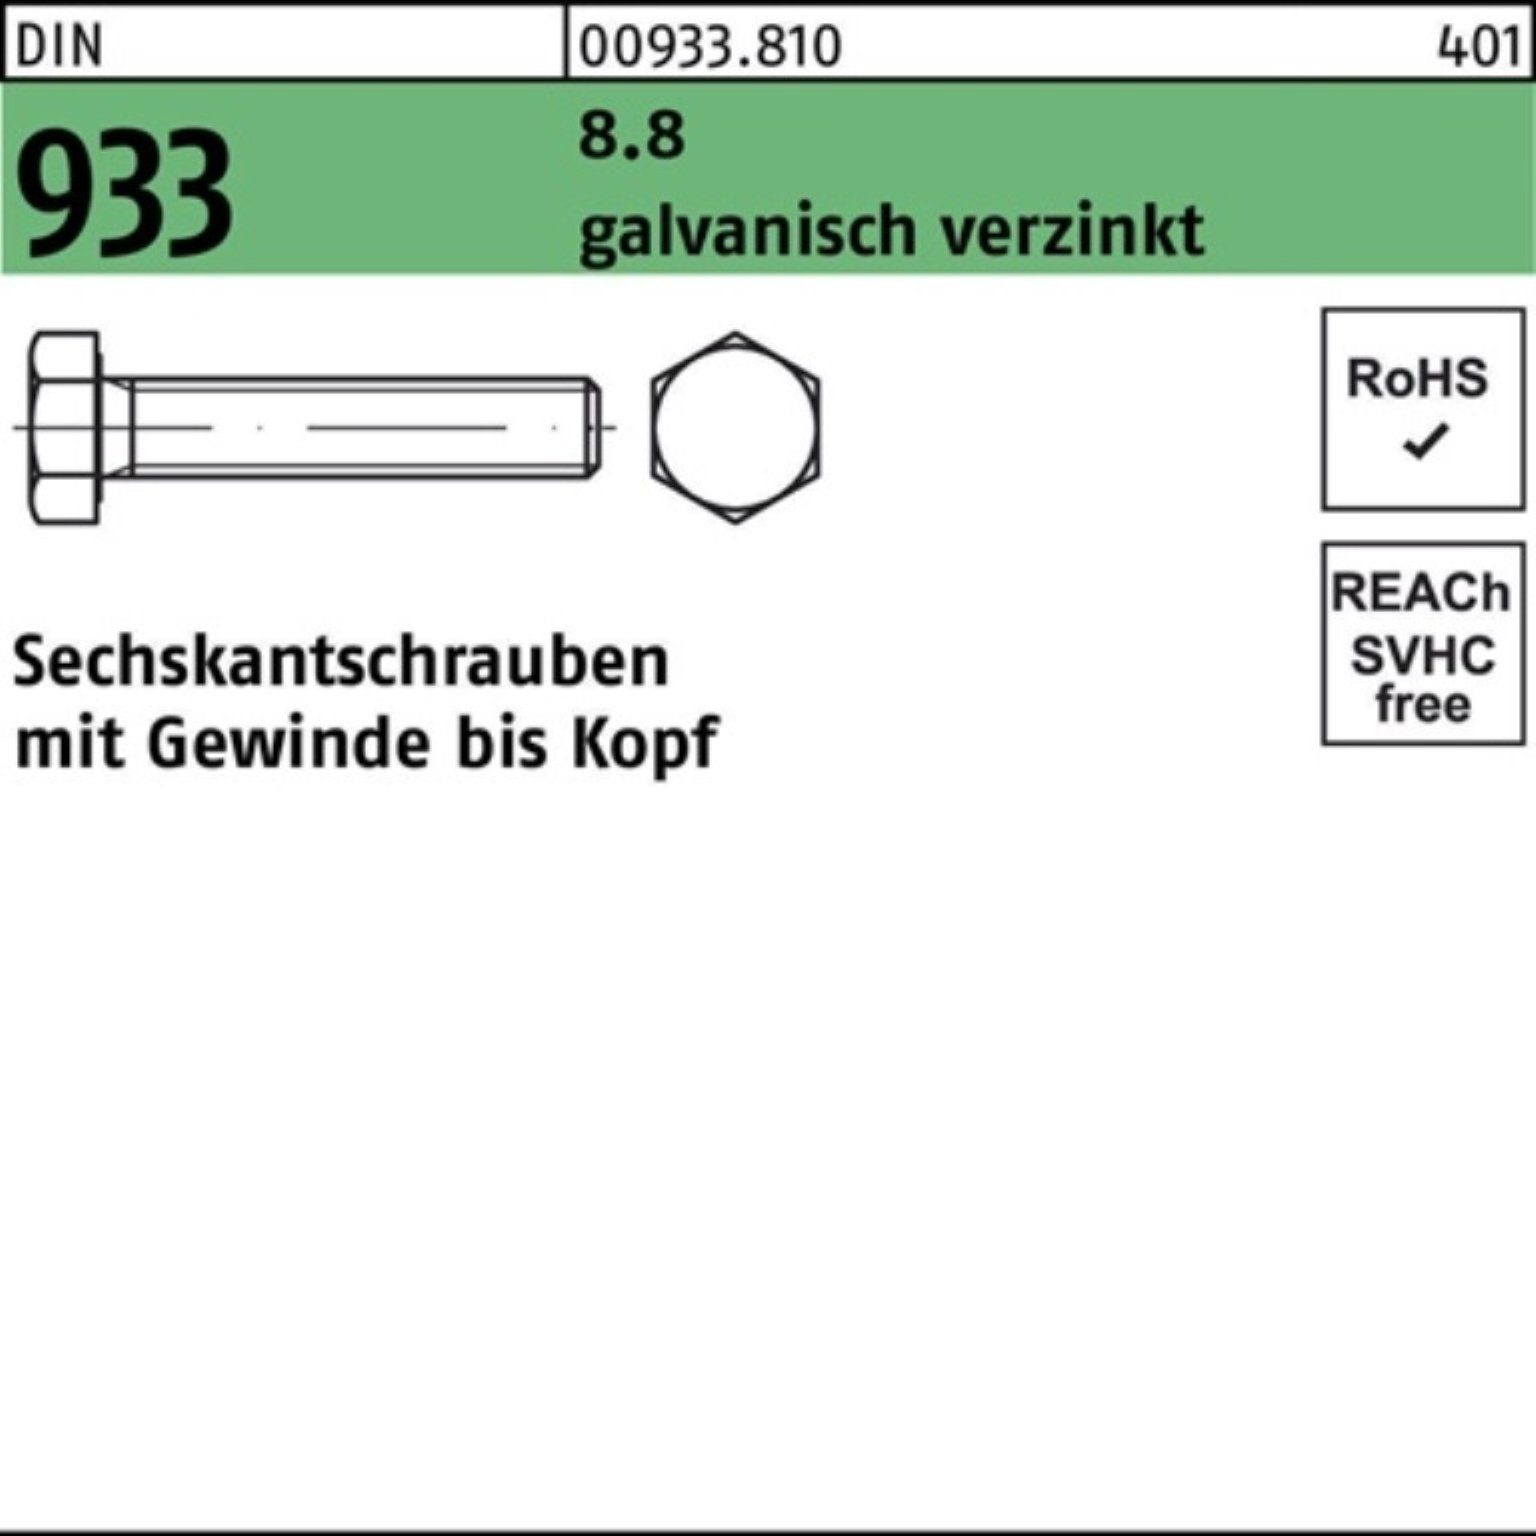 Reyher Sechskantschraube 100er 10 8.8 Stü VG Pack 40 933 Sechskantschraube galv.verz. DIN M27x